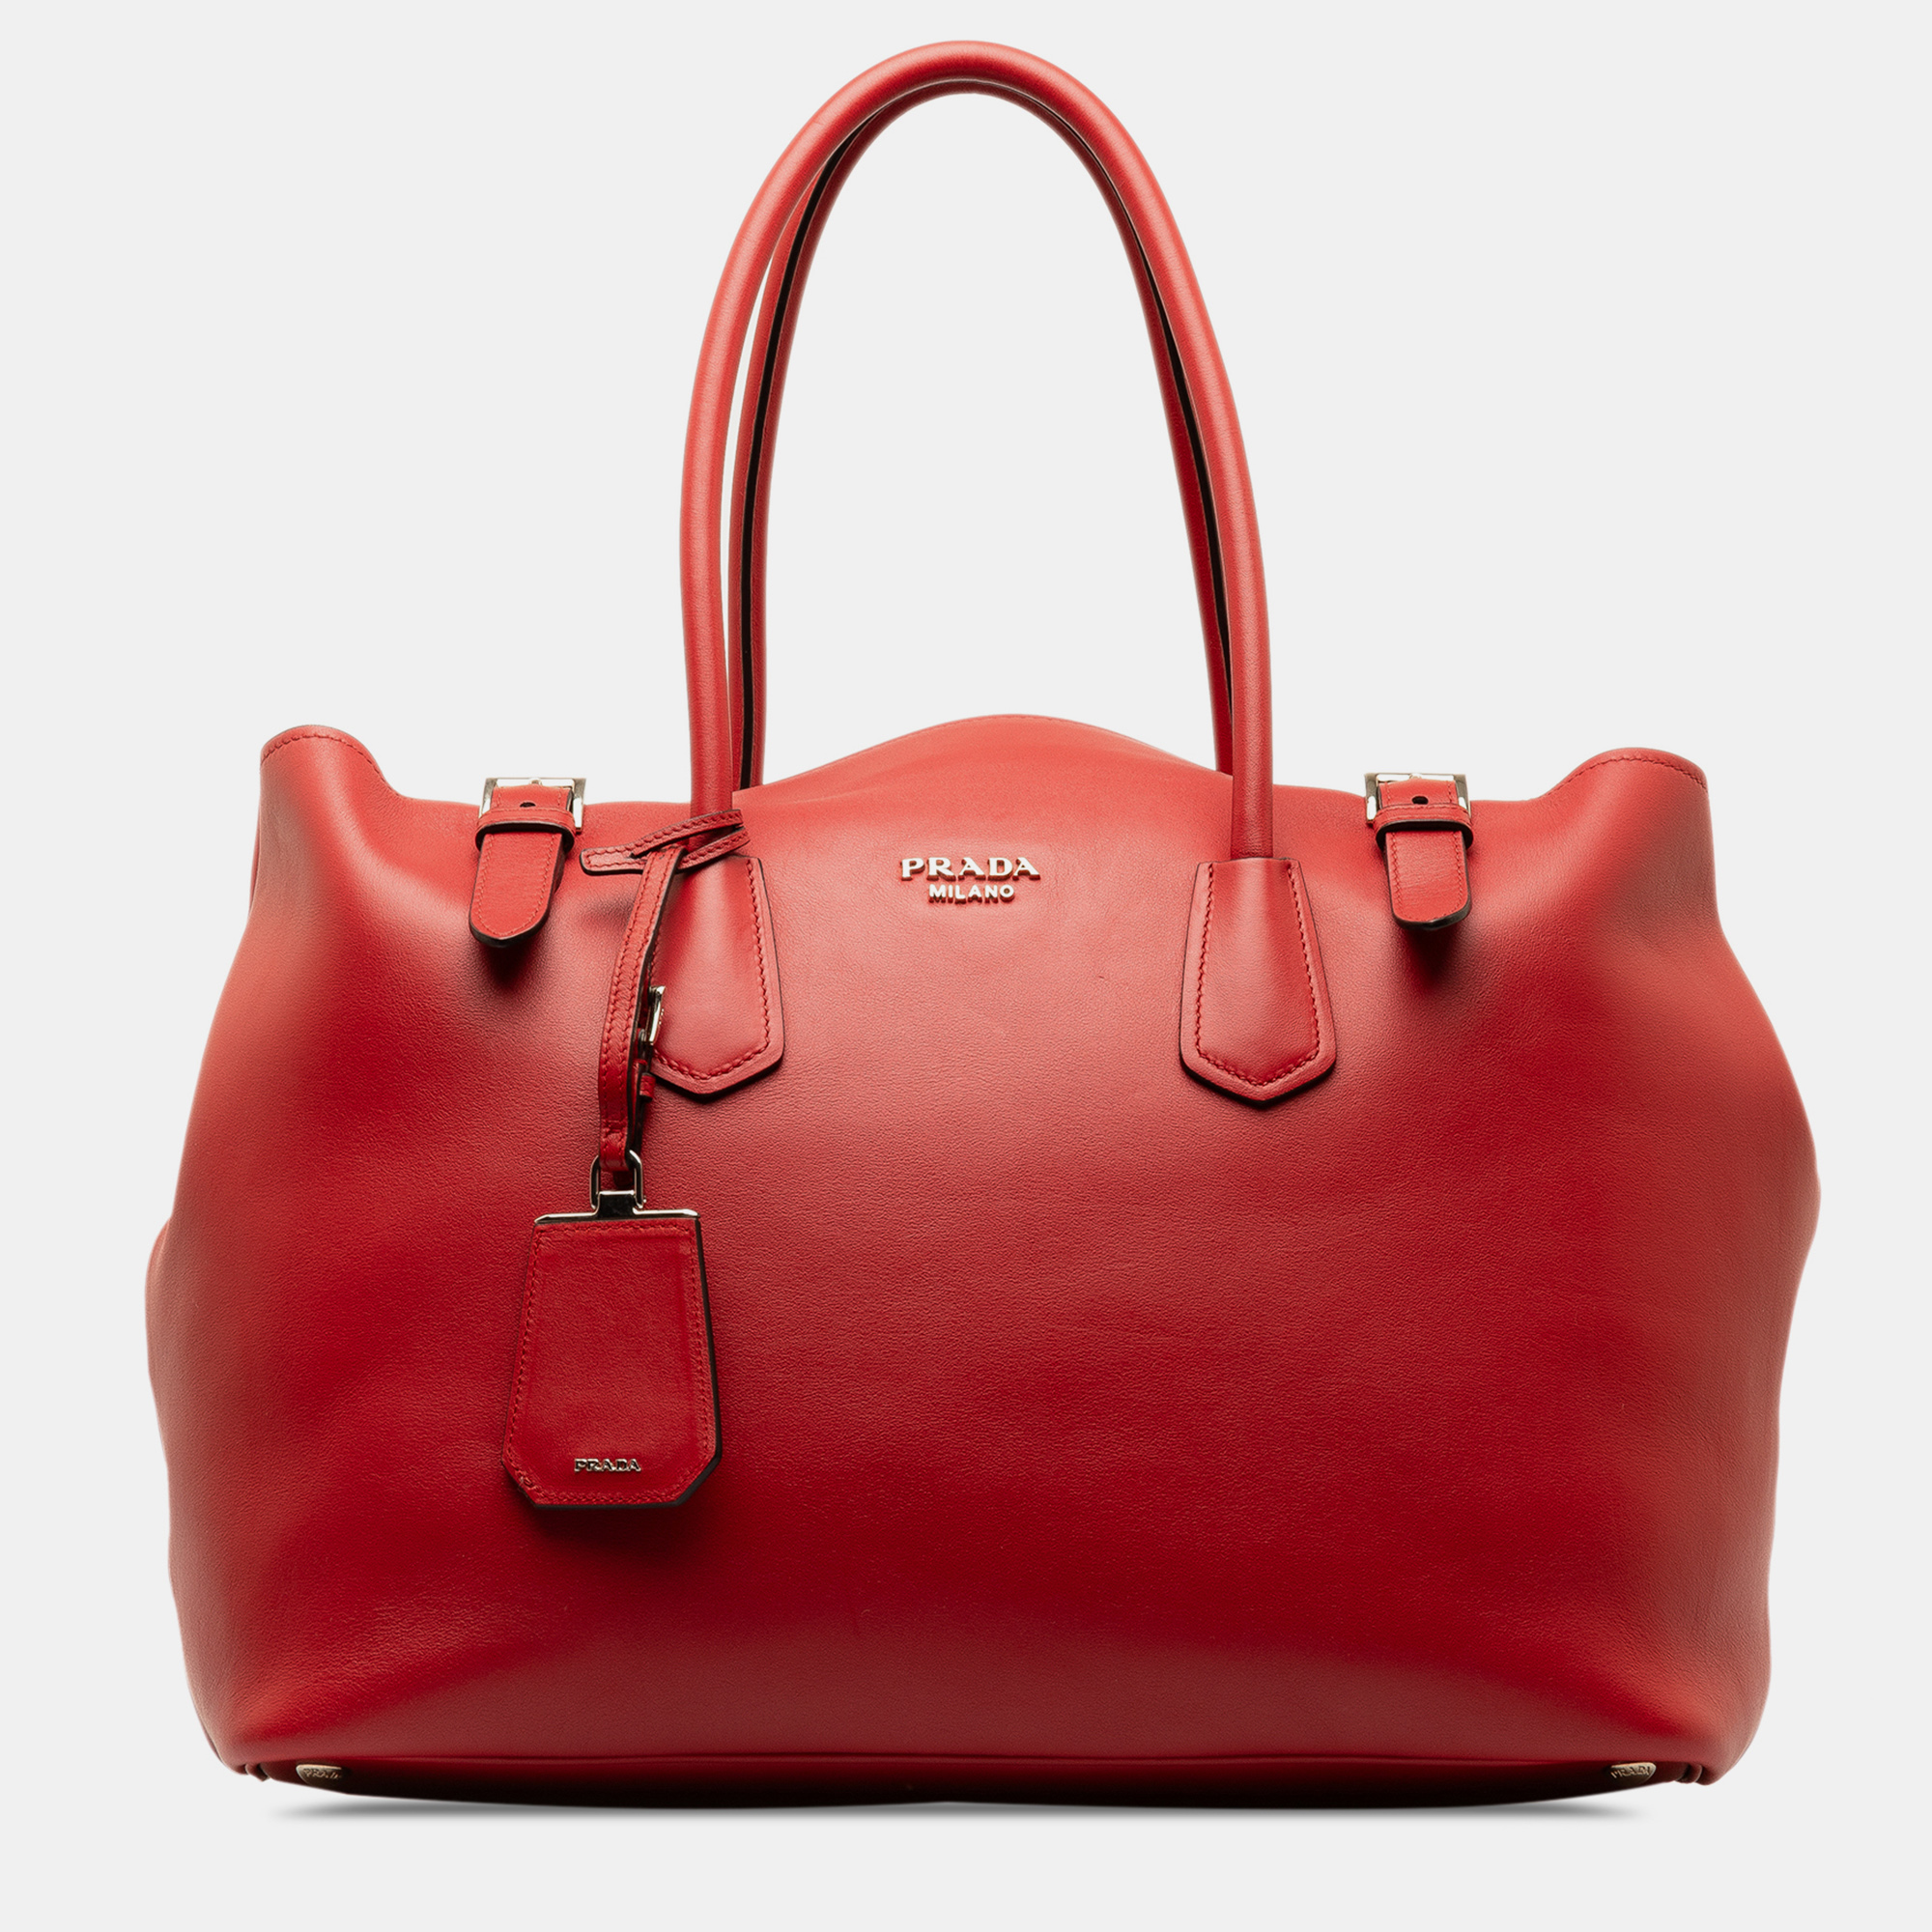 

Prada Red Saffiano Leather Buckle Handbag